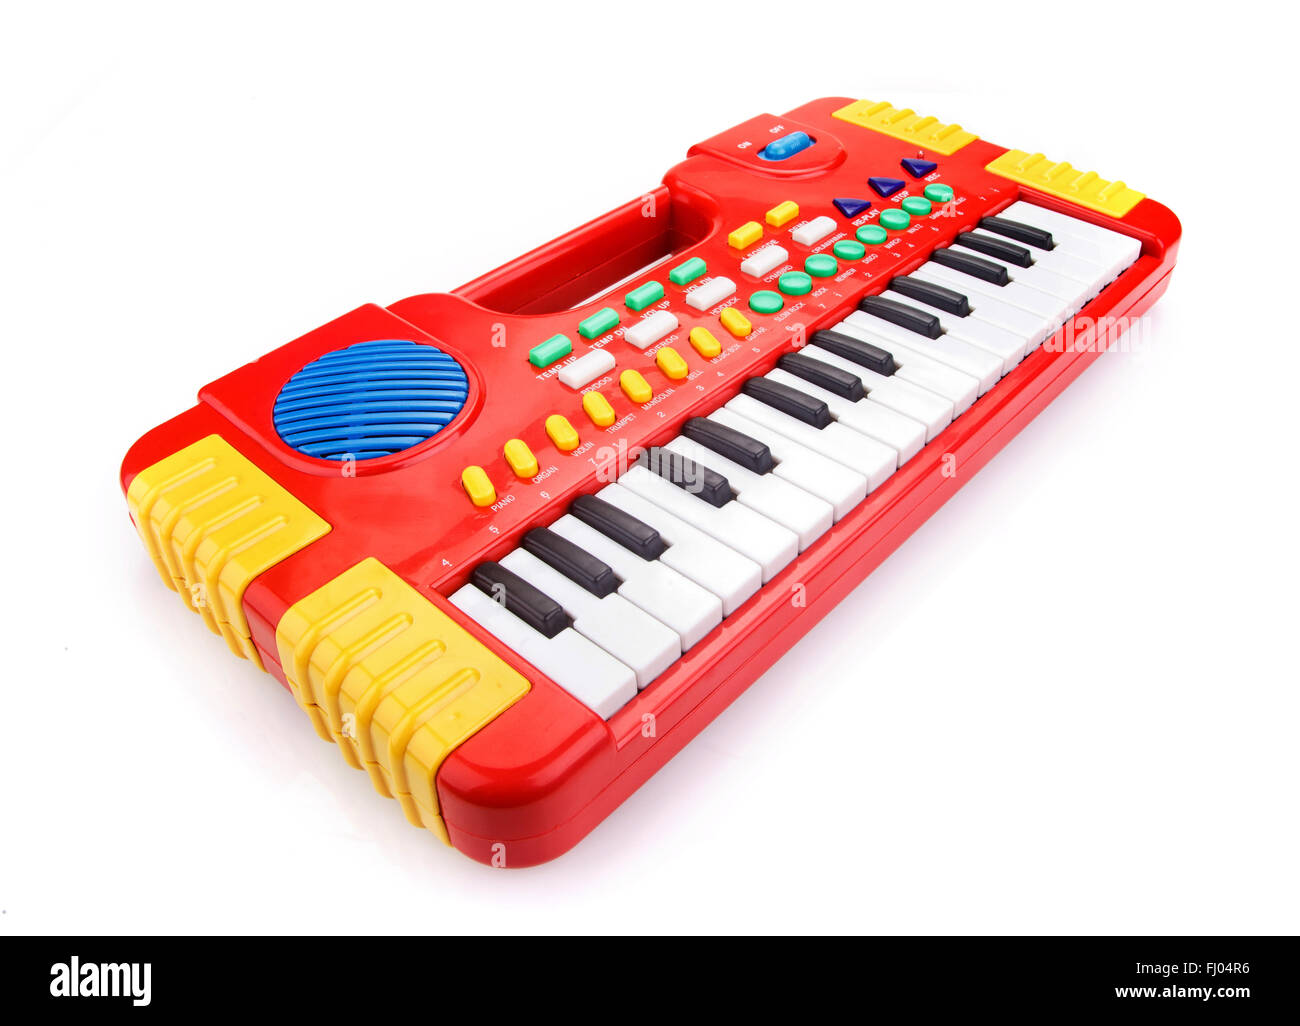 keyboard toy instrument Stock Photo